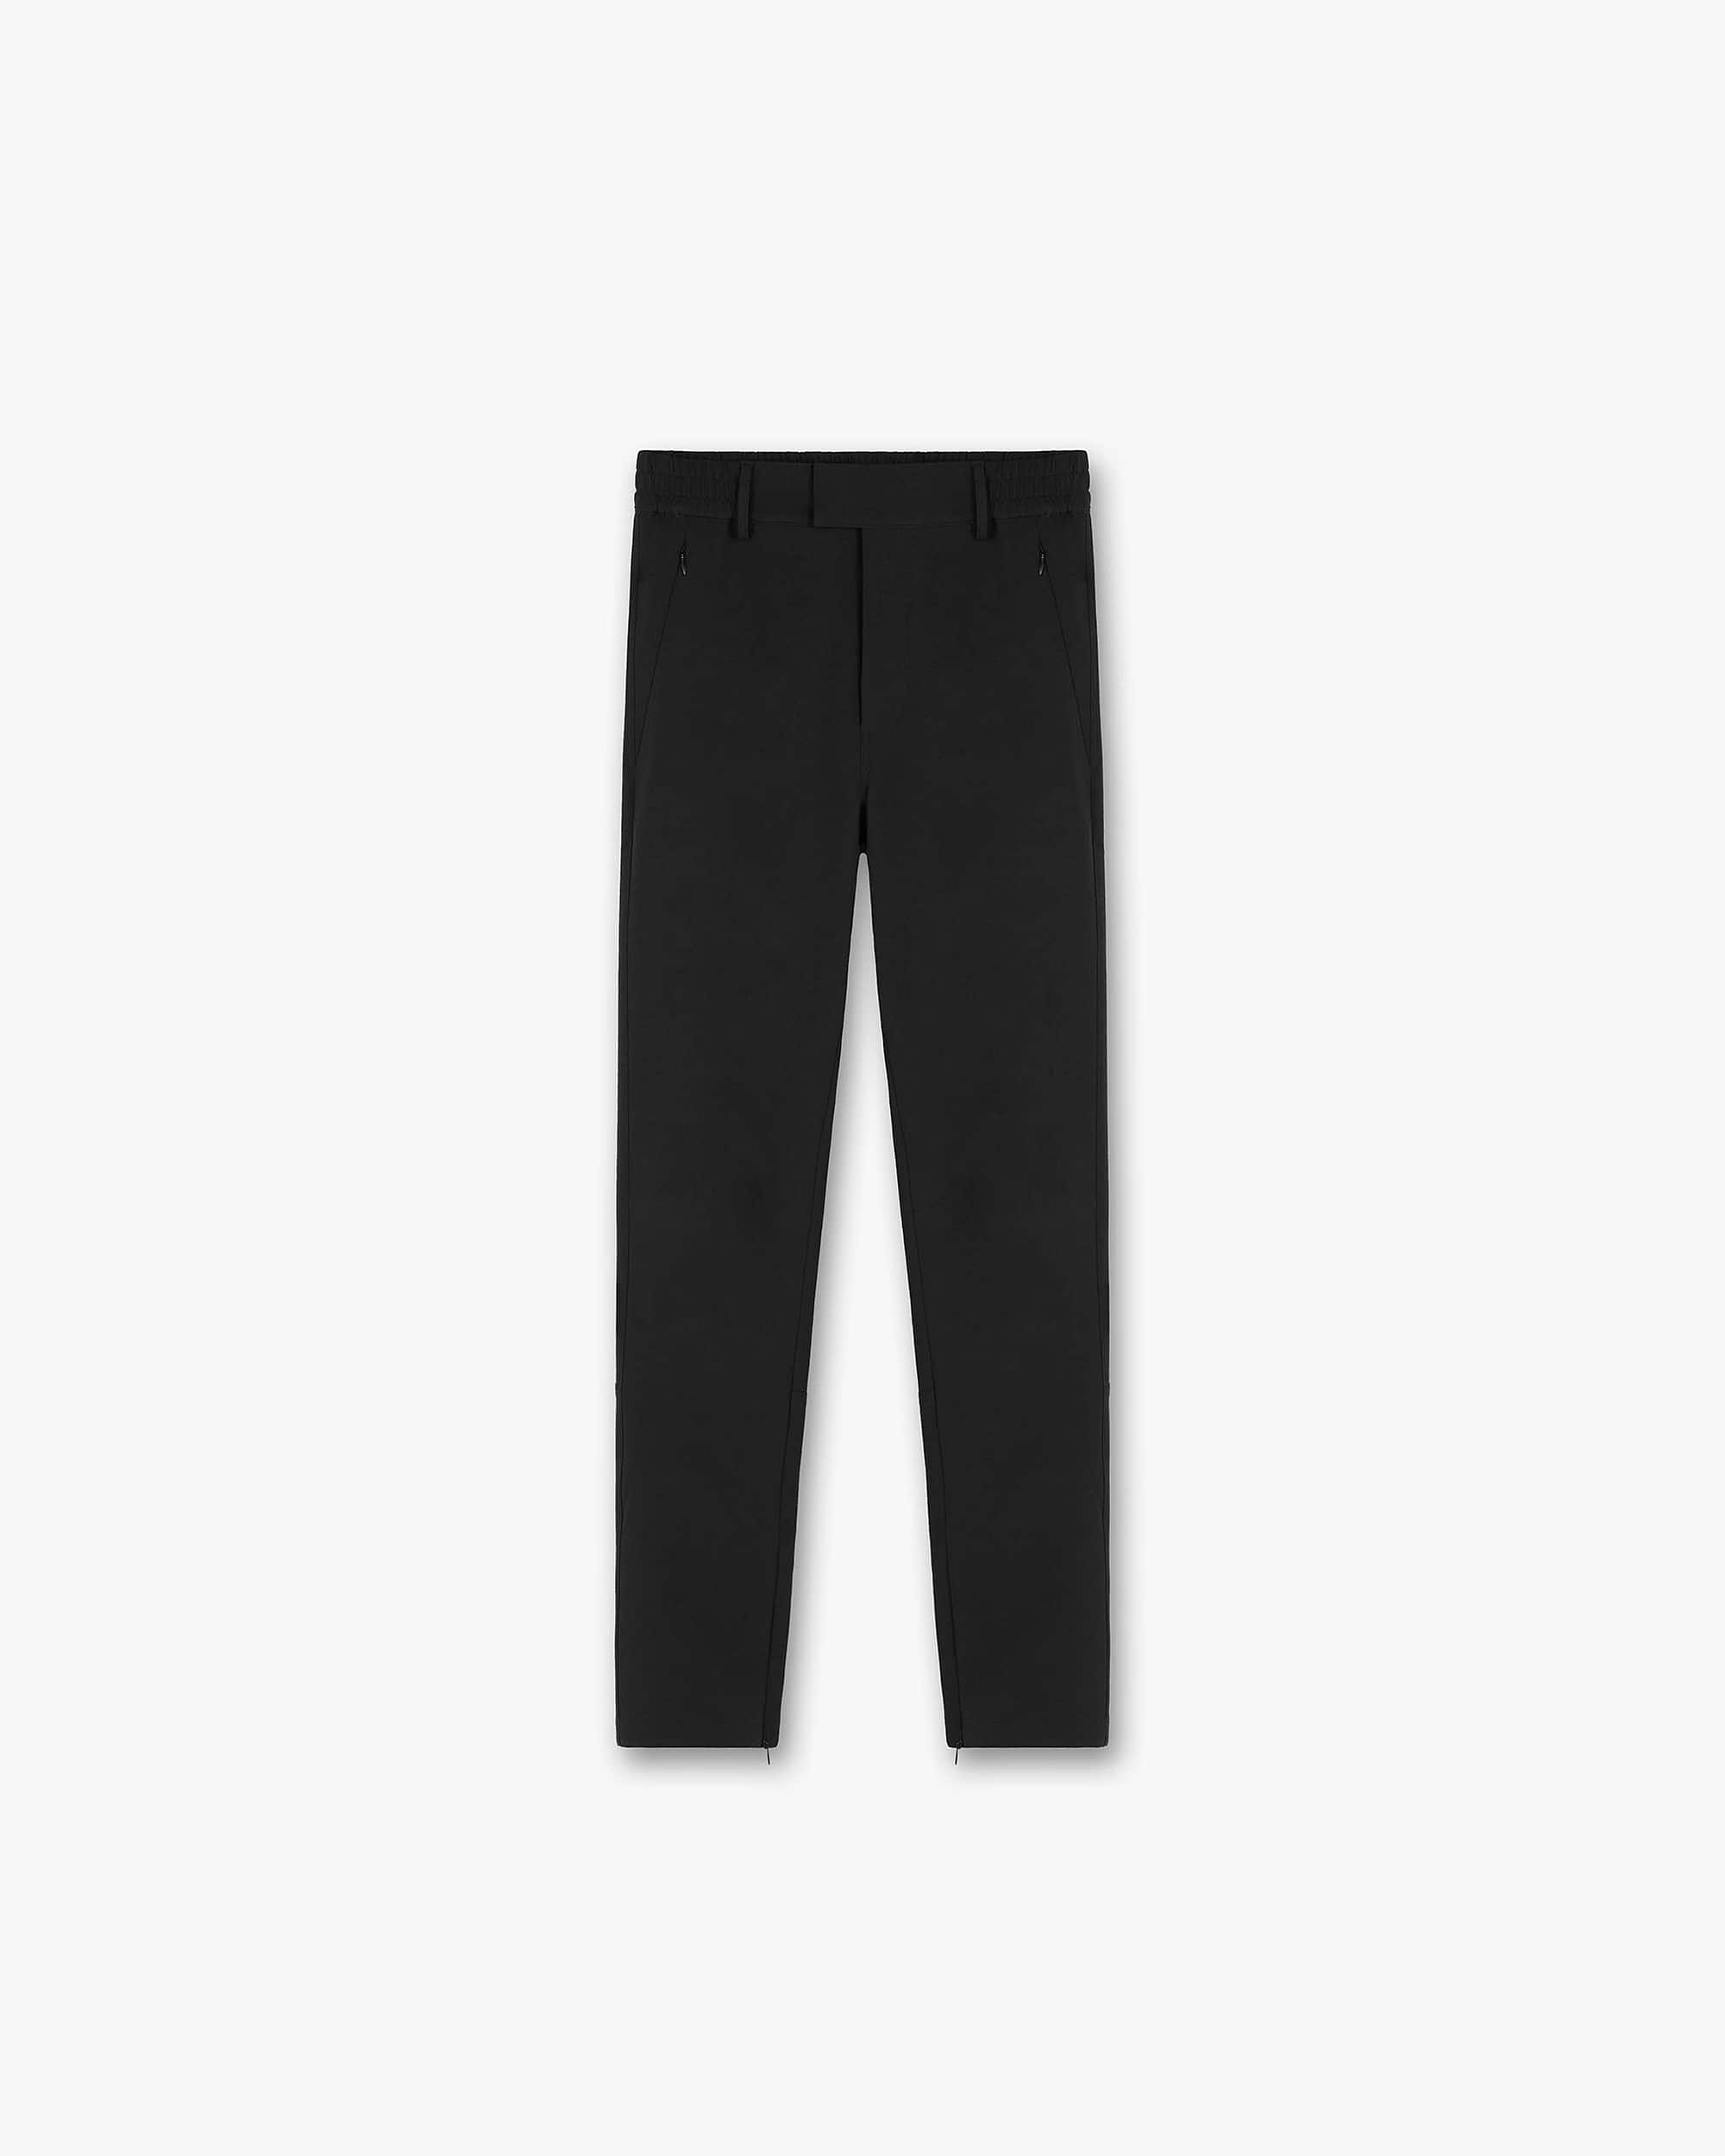 The Core Pant | Black Pants Core | Represent Clo